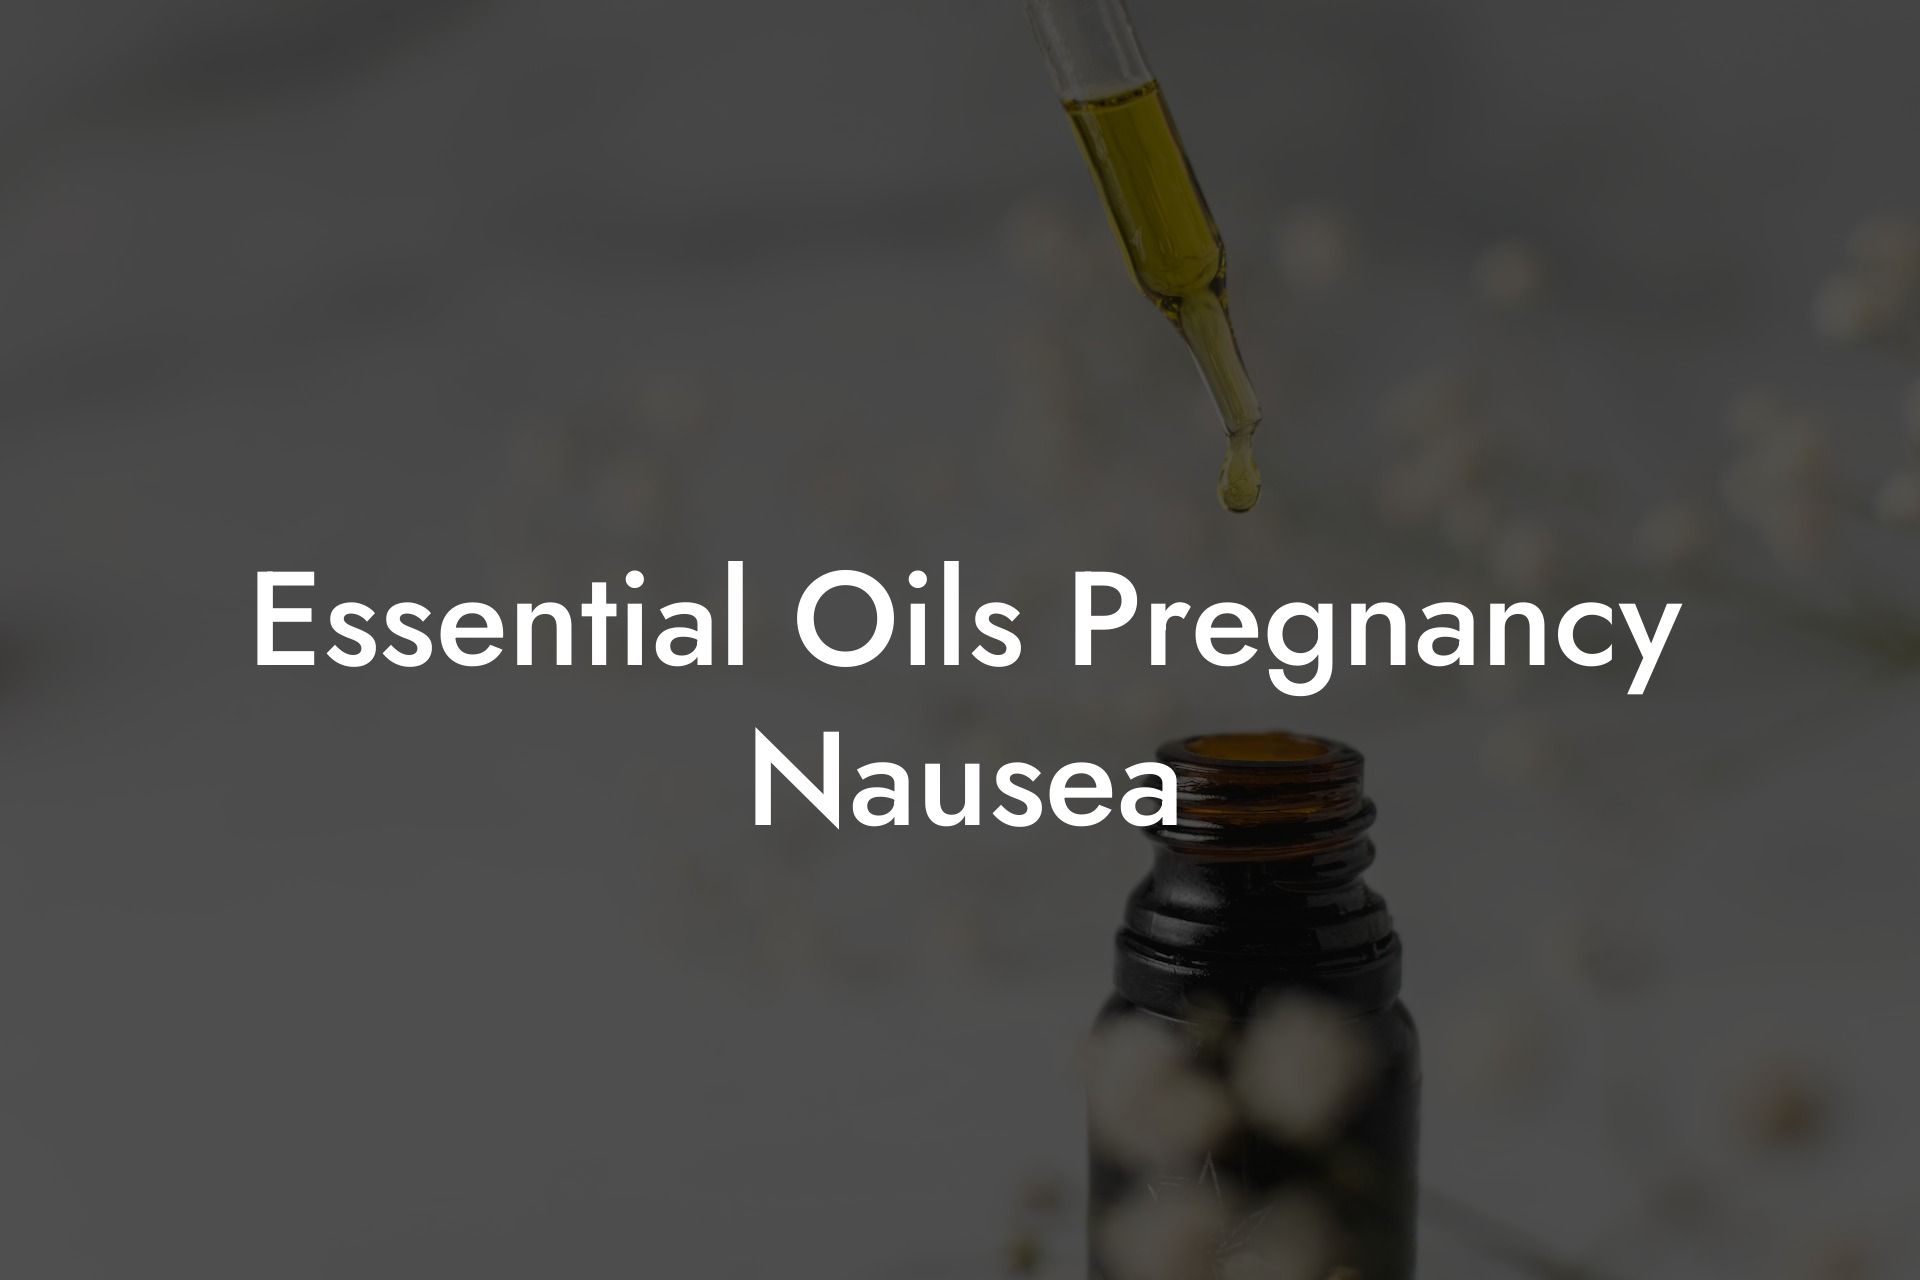 Essential Oils Pregnancy Nausea